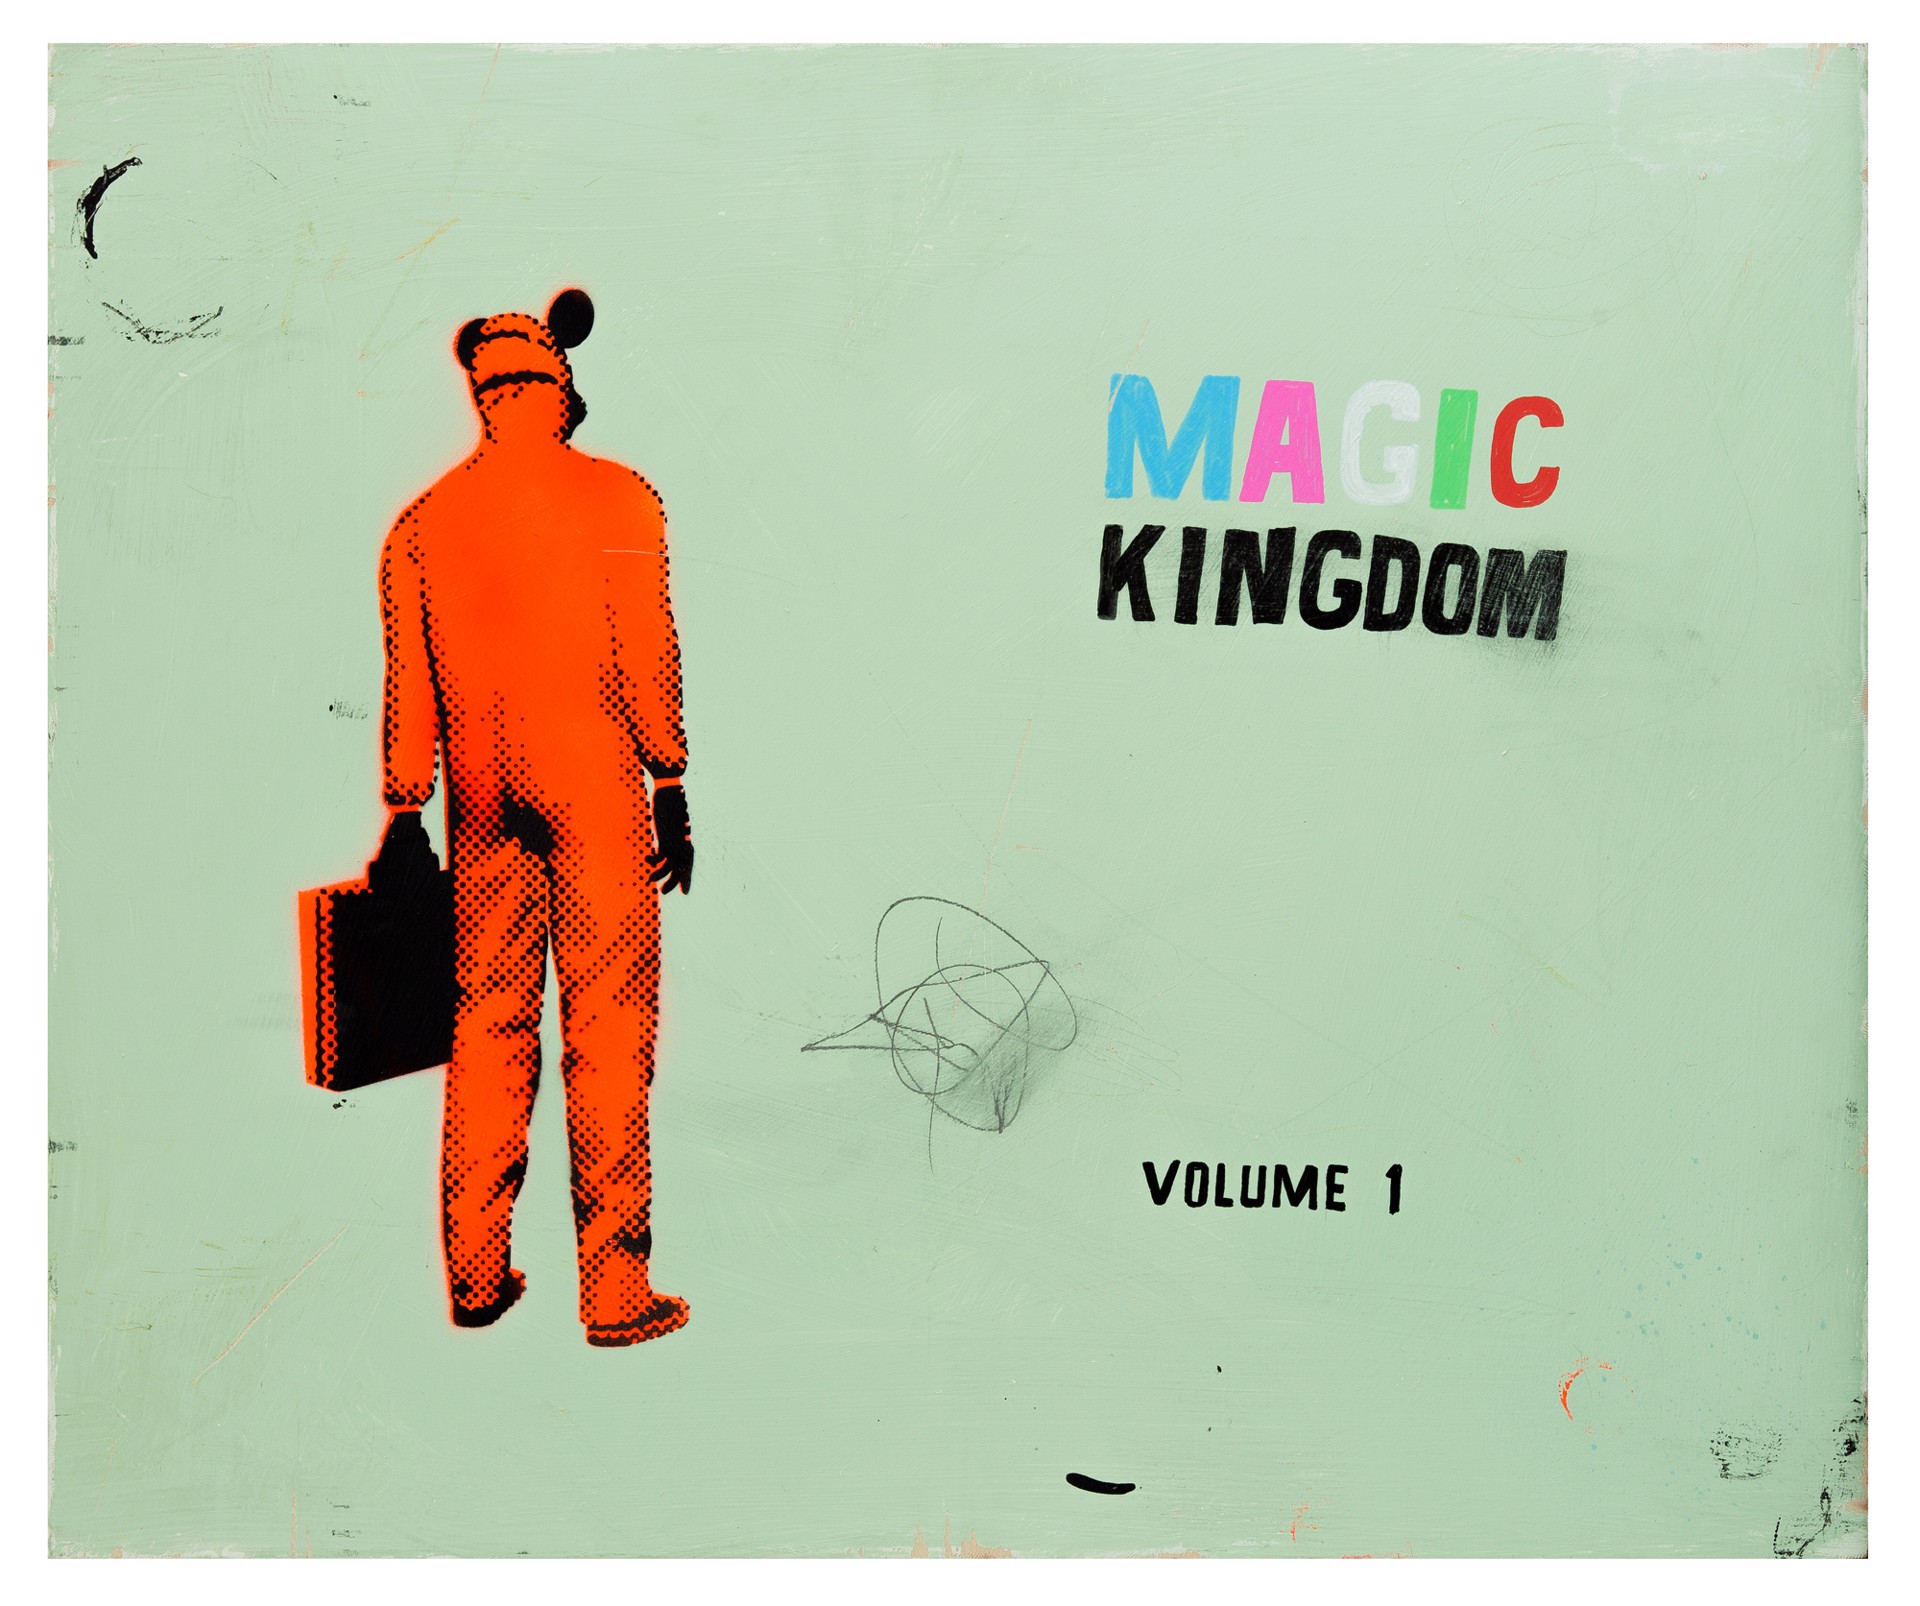 Magic Kingdom by Bill Barminski